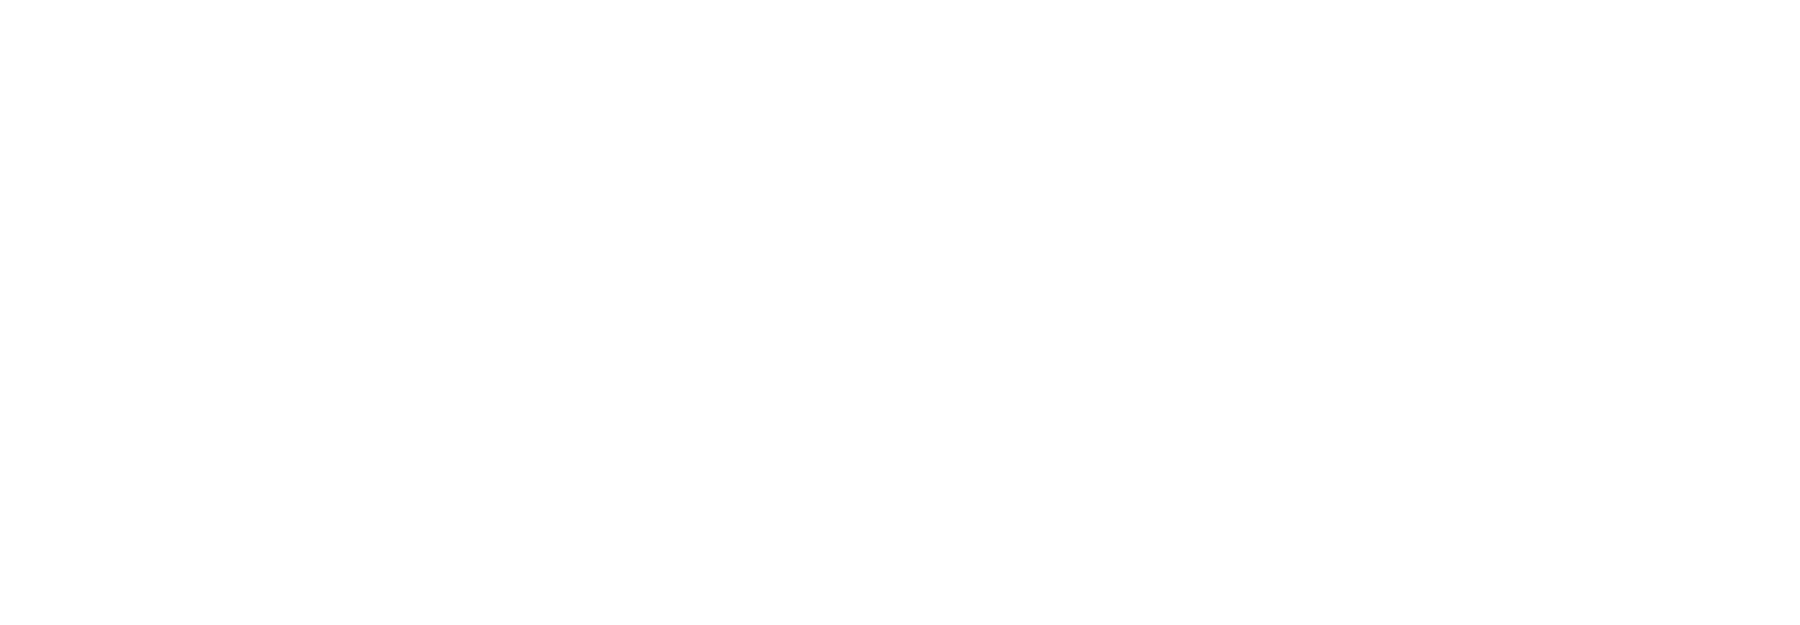 The Caveman's Valentine logo